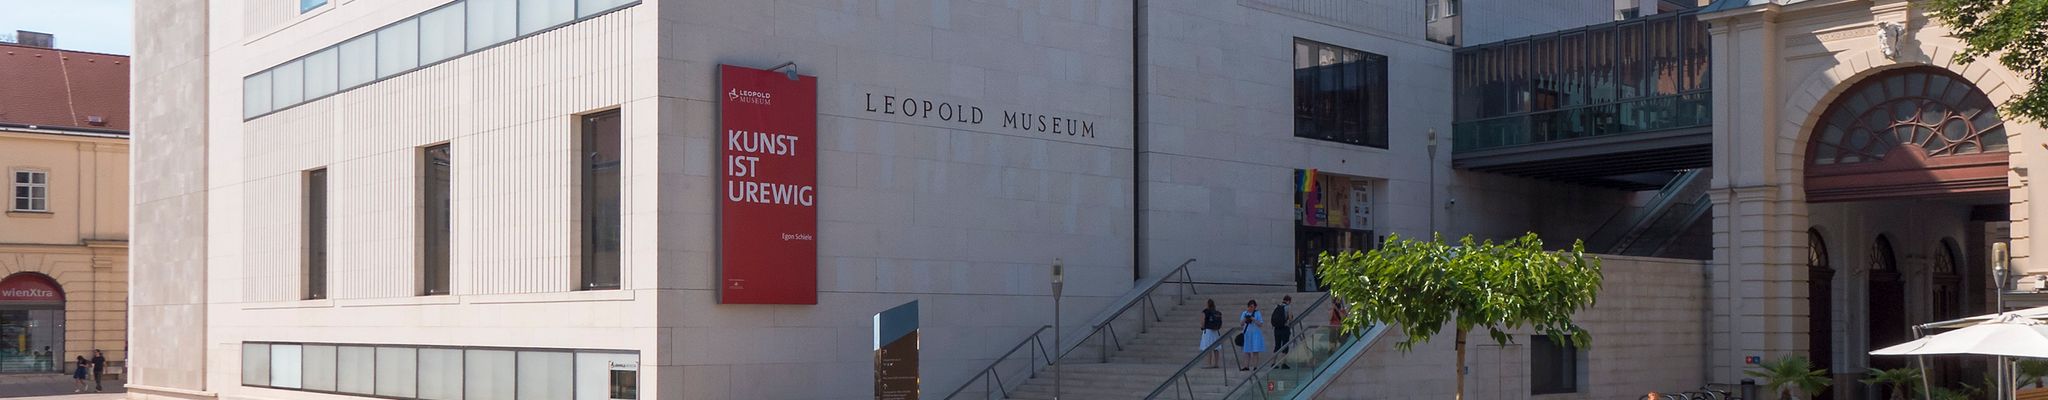 Museu Leopold